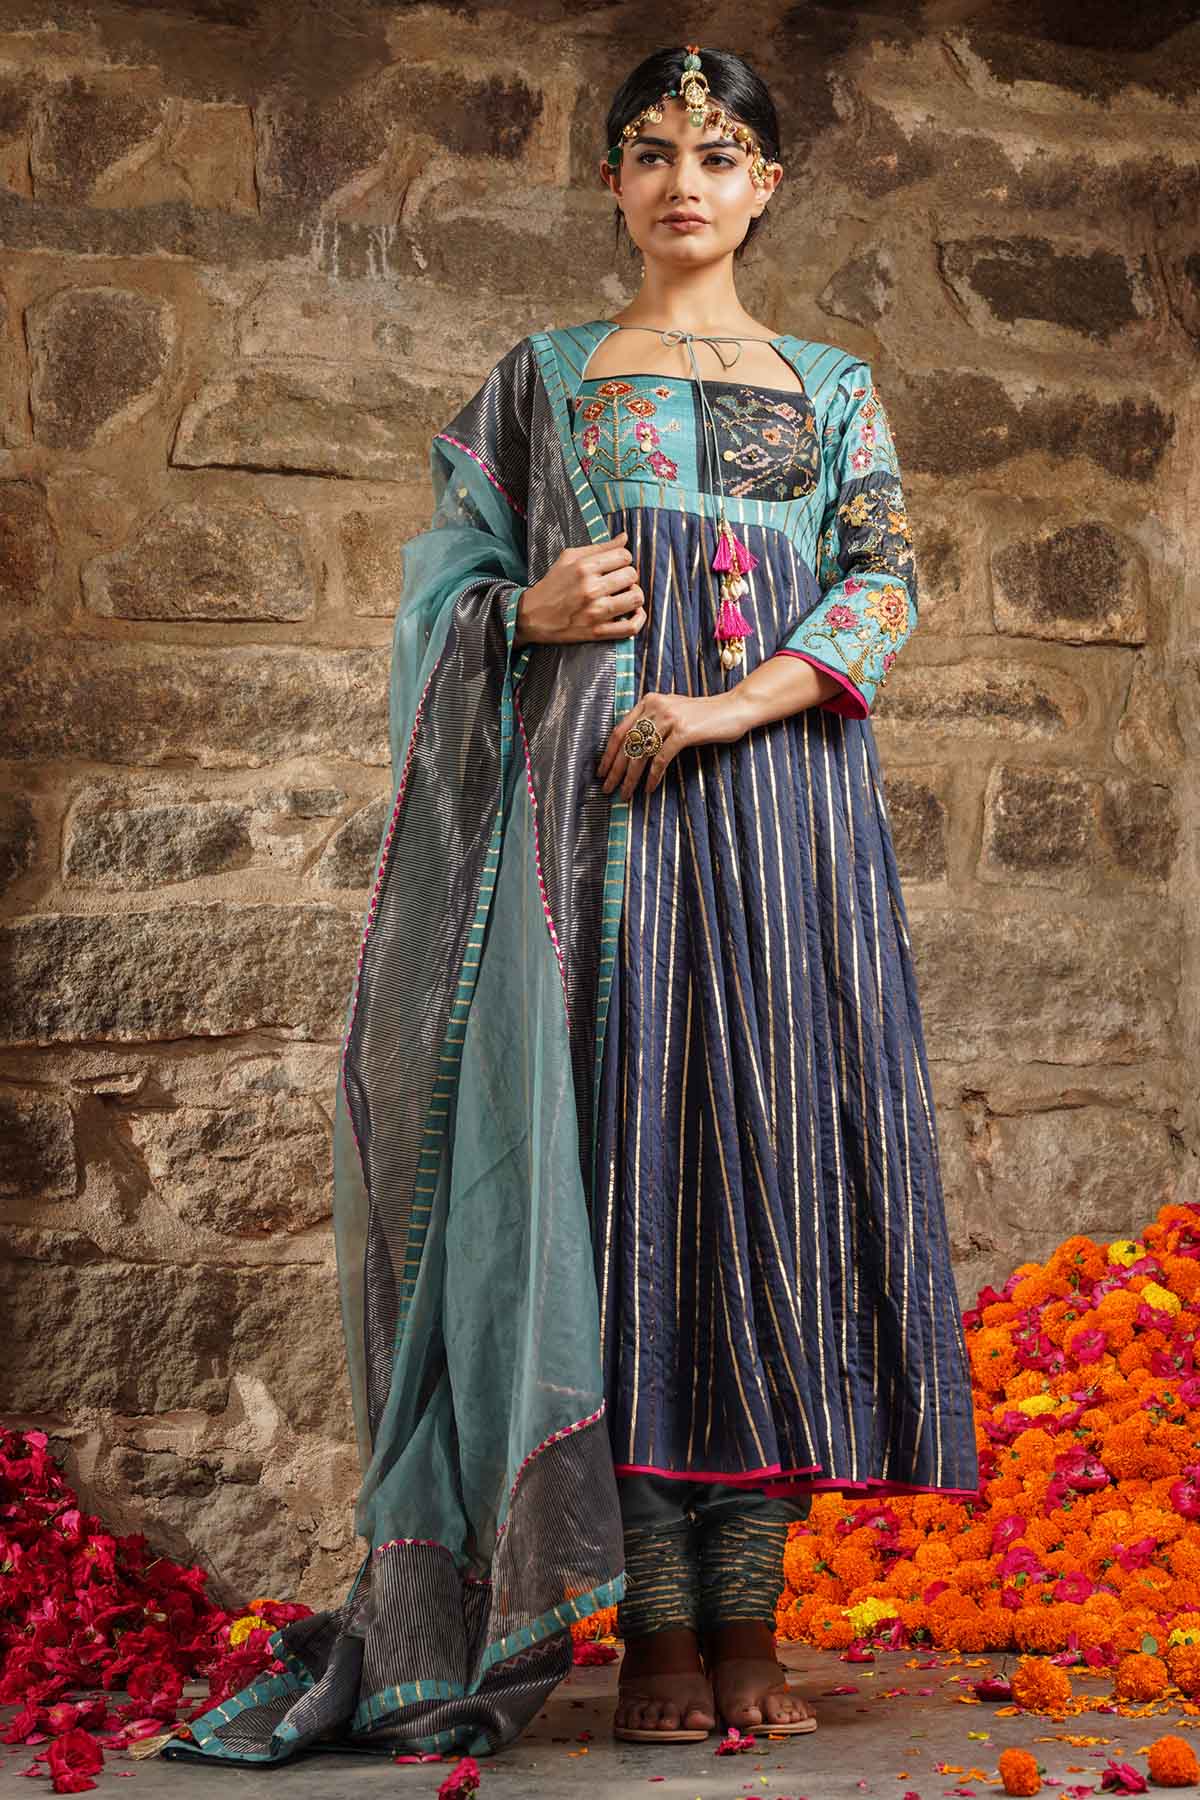 Seharre Blue Zari Stripes Anarkali Set for women online at ScrollnShops